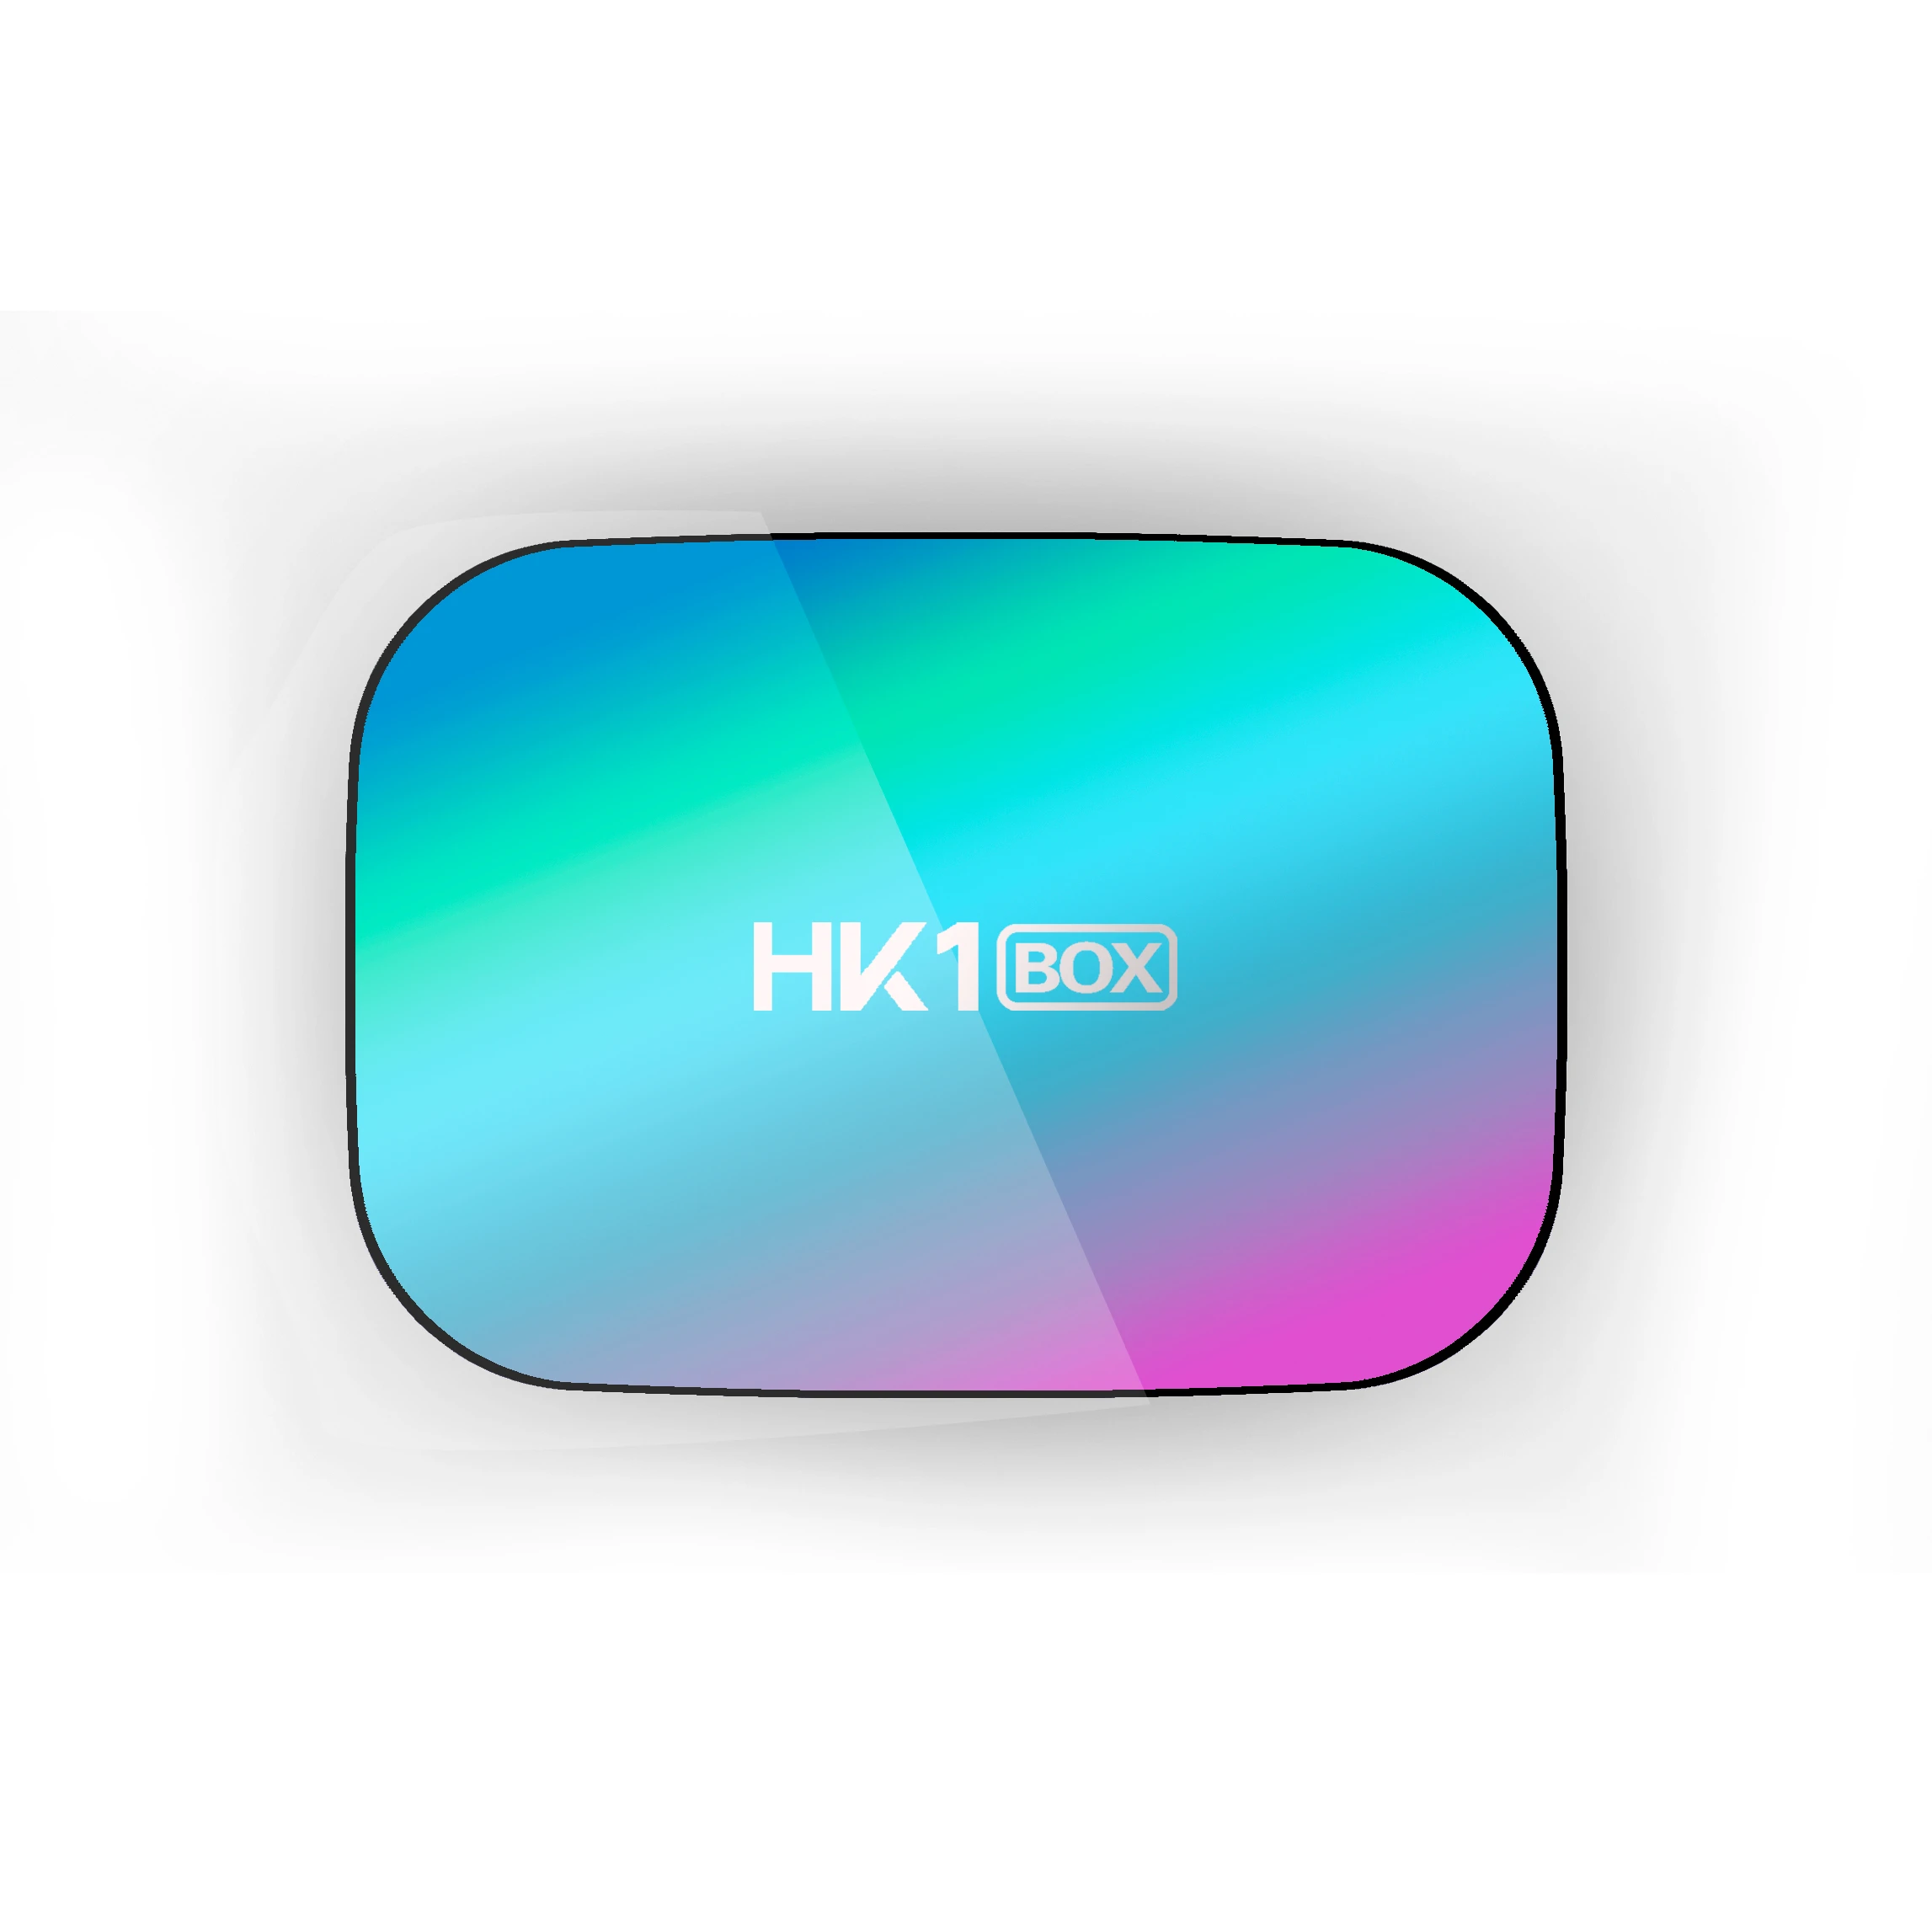 HK1 BOX Android 9.0 Smart Tv Box Amlogic S905X3 Set Top Box 4GB32GB 2.4G/5G AC Wifi 1000M BT4.0 Hk1Box (62430867137)